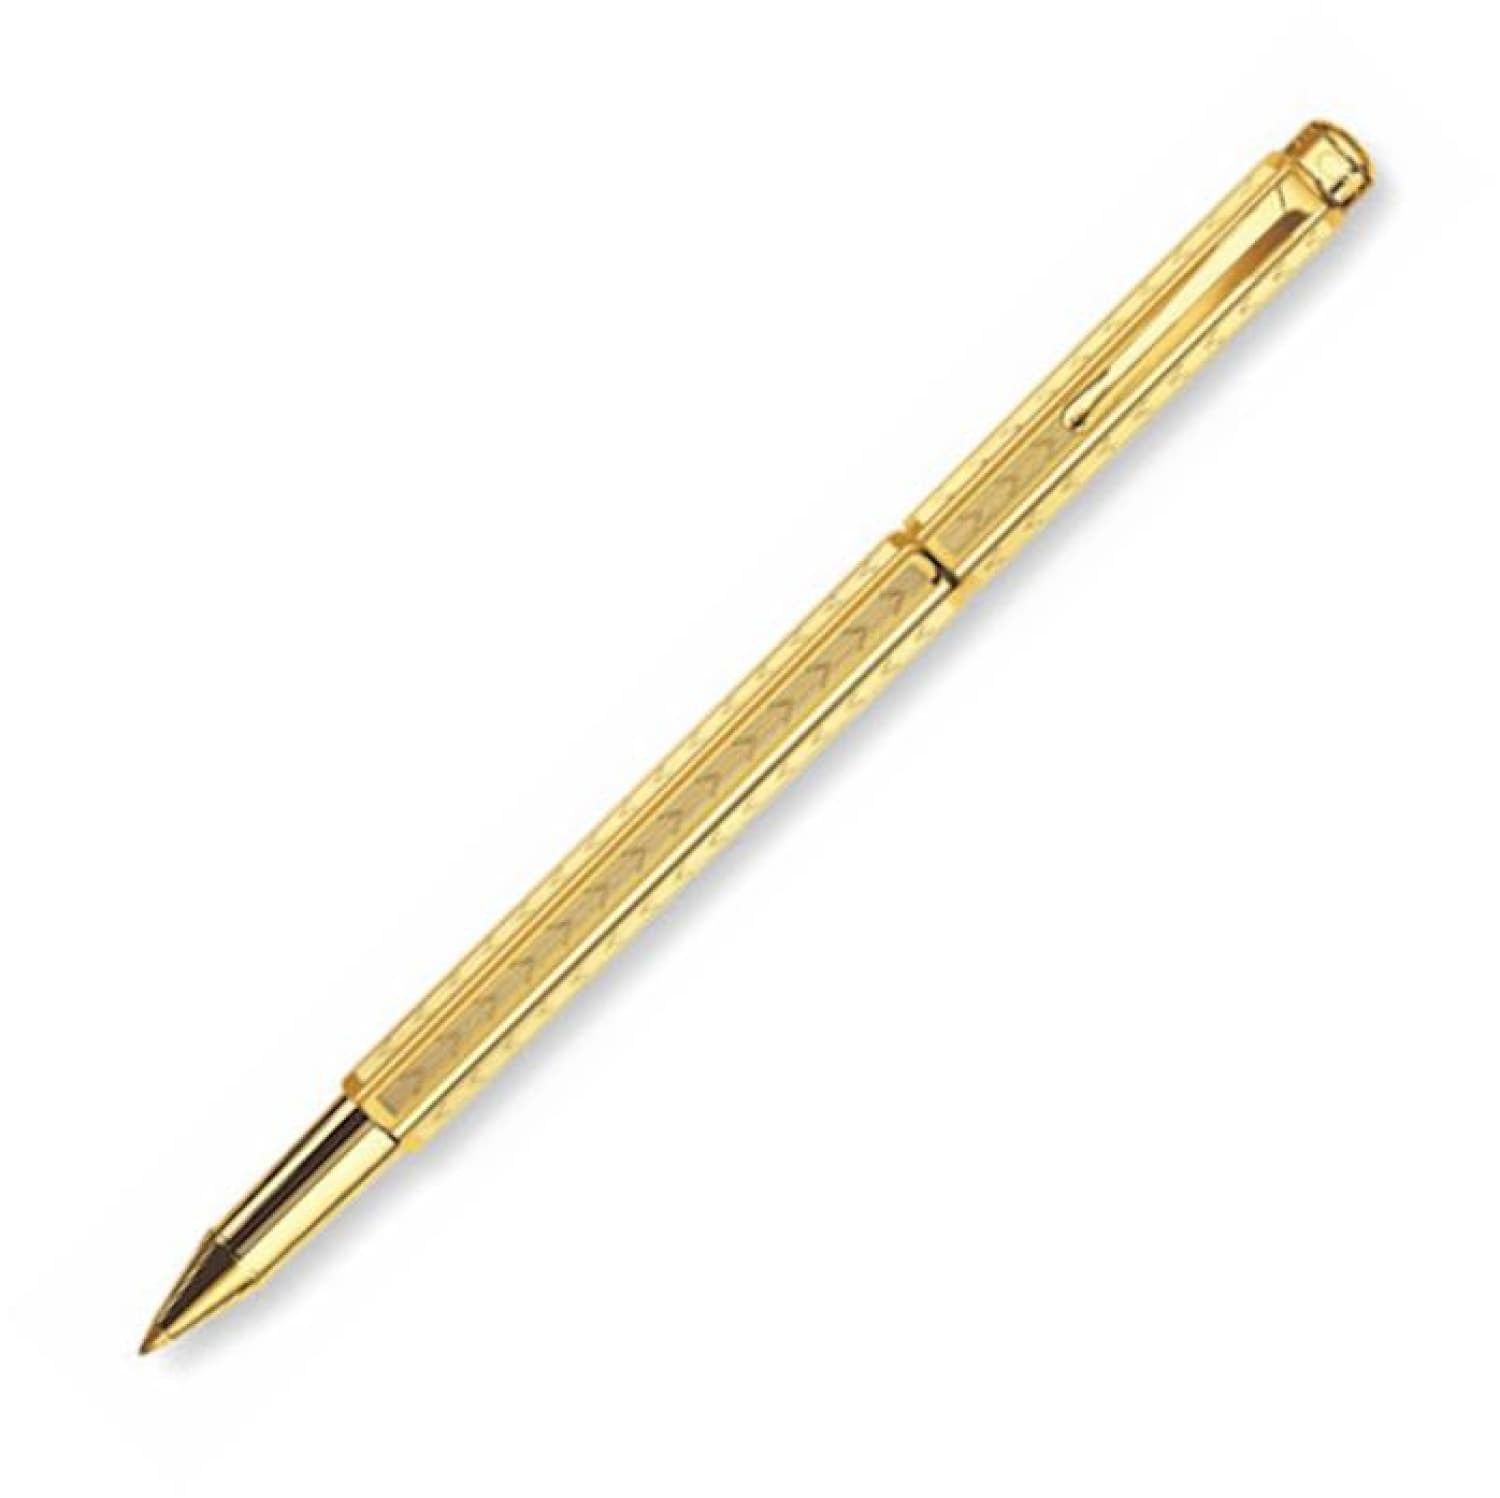 Caran d'Ache Ecridor Rollerball Pen in Gold Plated Chevron